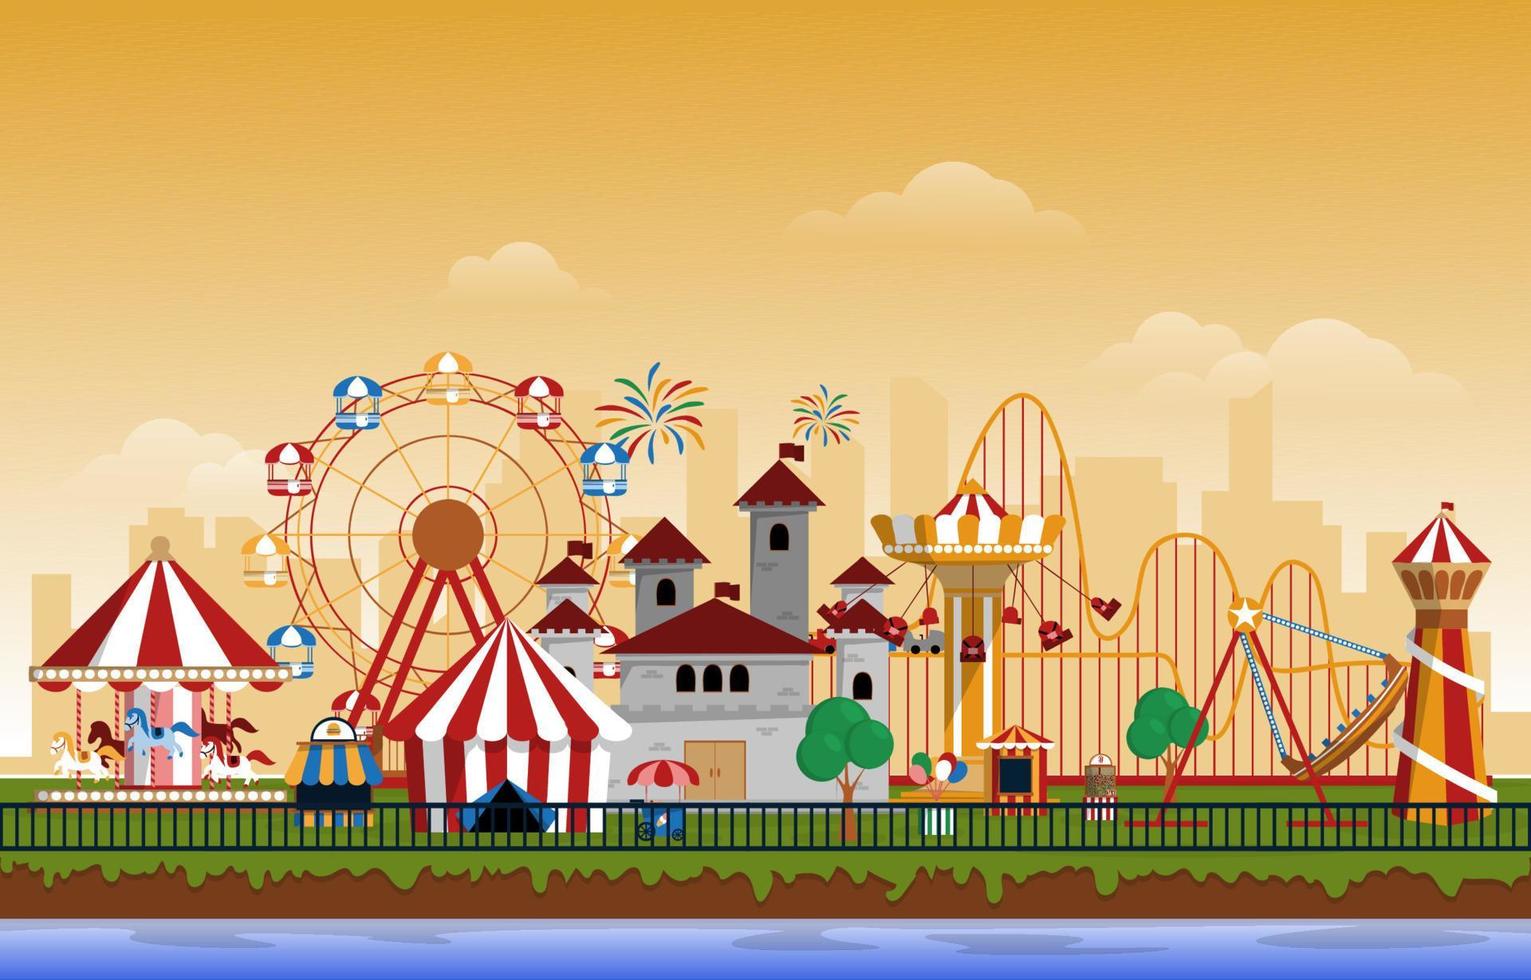 Parc d'attractions fun fair carnaval télévision vector illustration